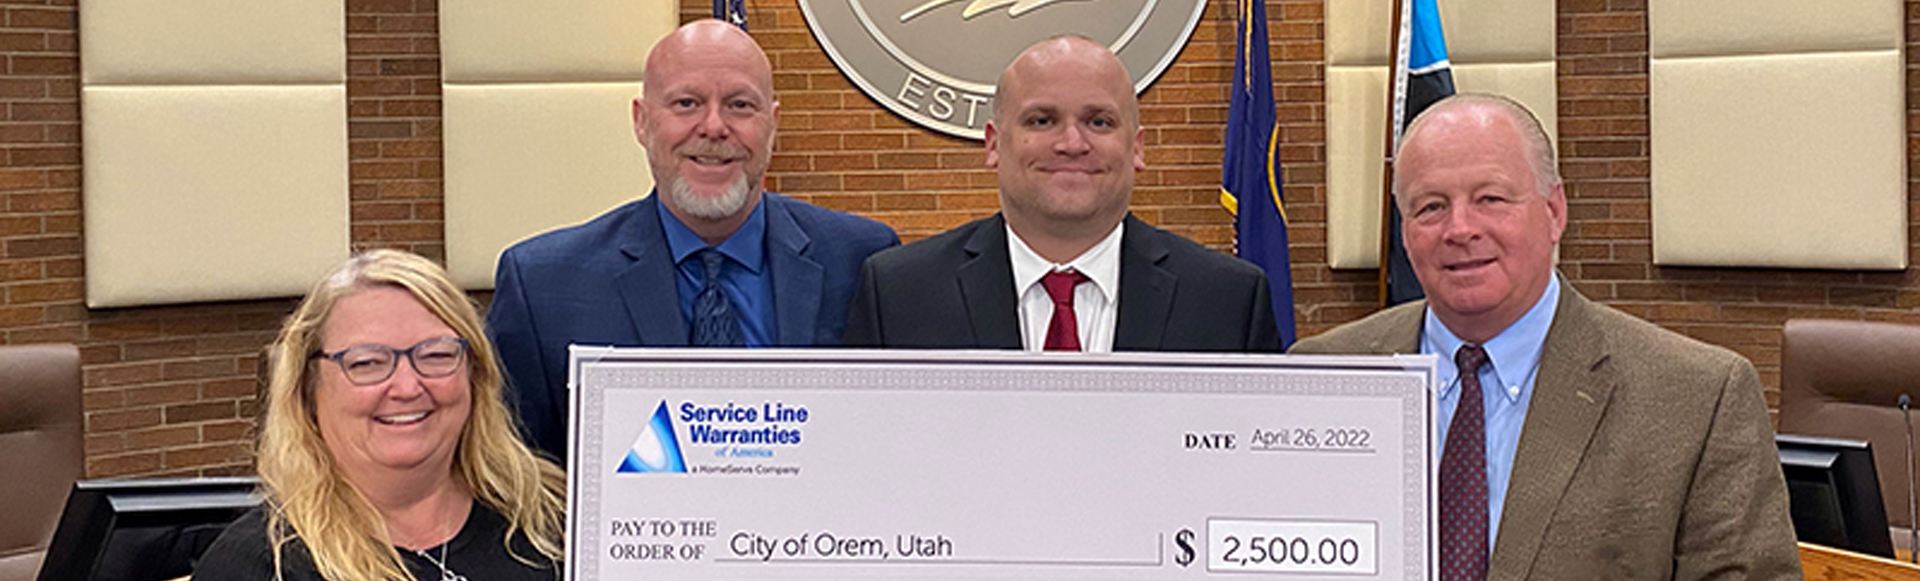 NLC Service Line Warranty Program and Orem, Utah, Celebrate Service Milestone